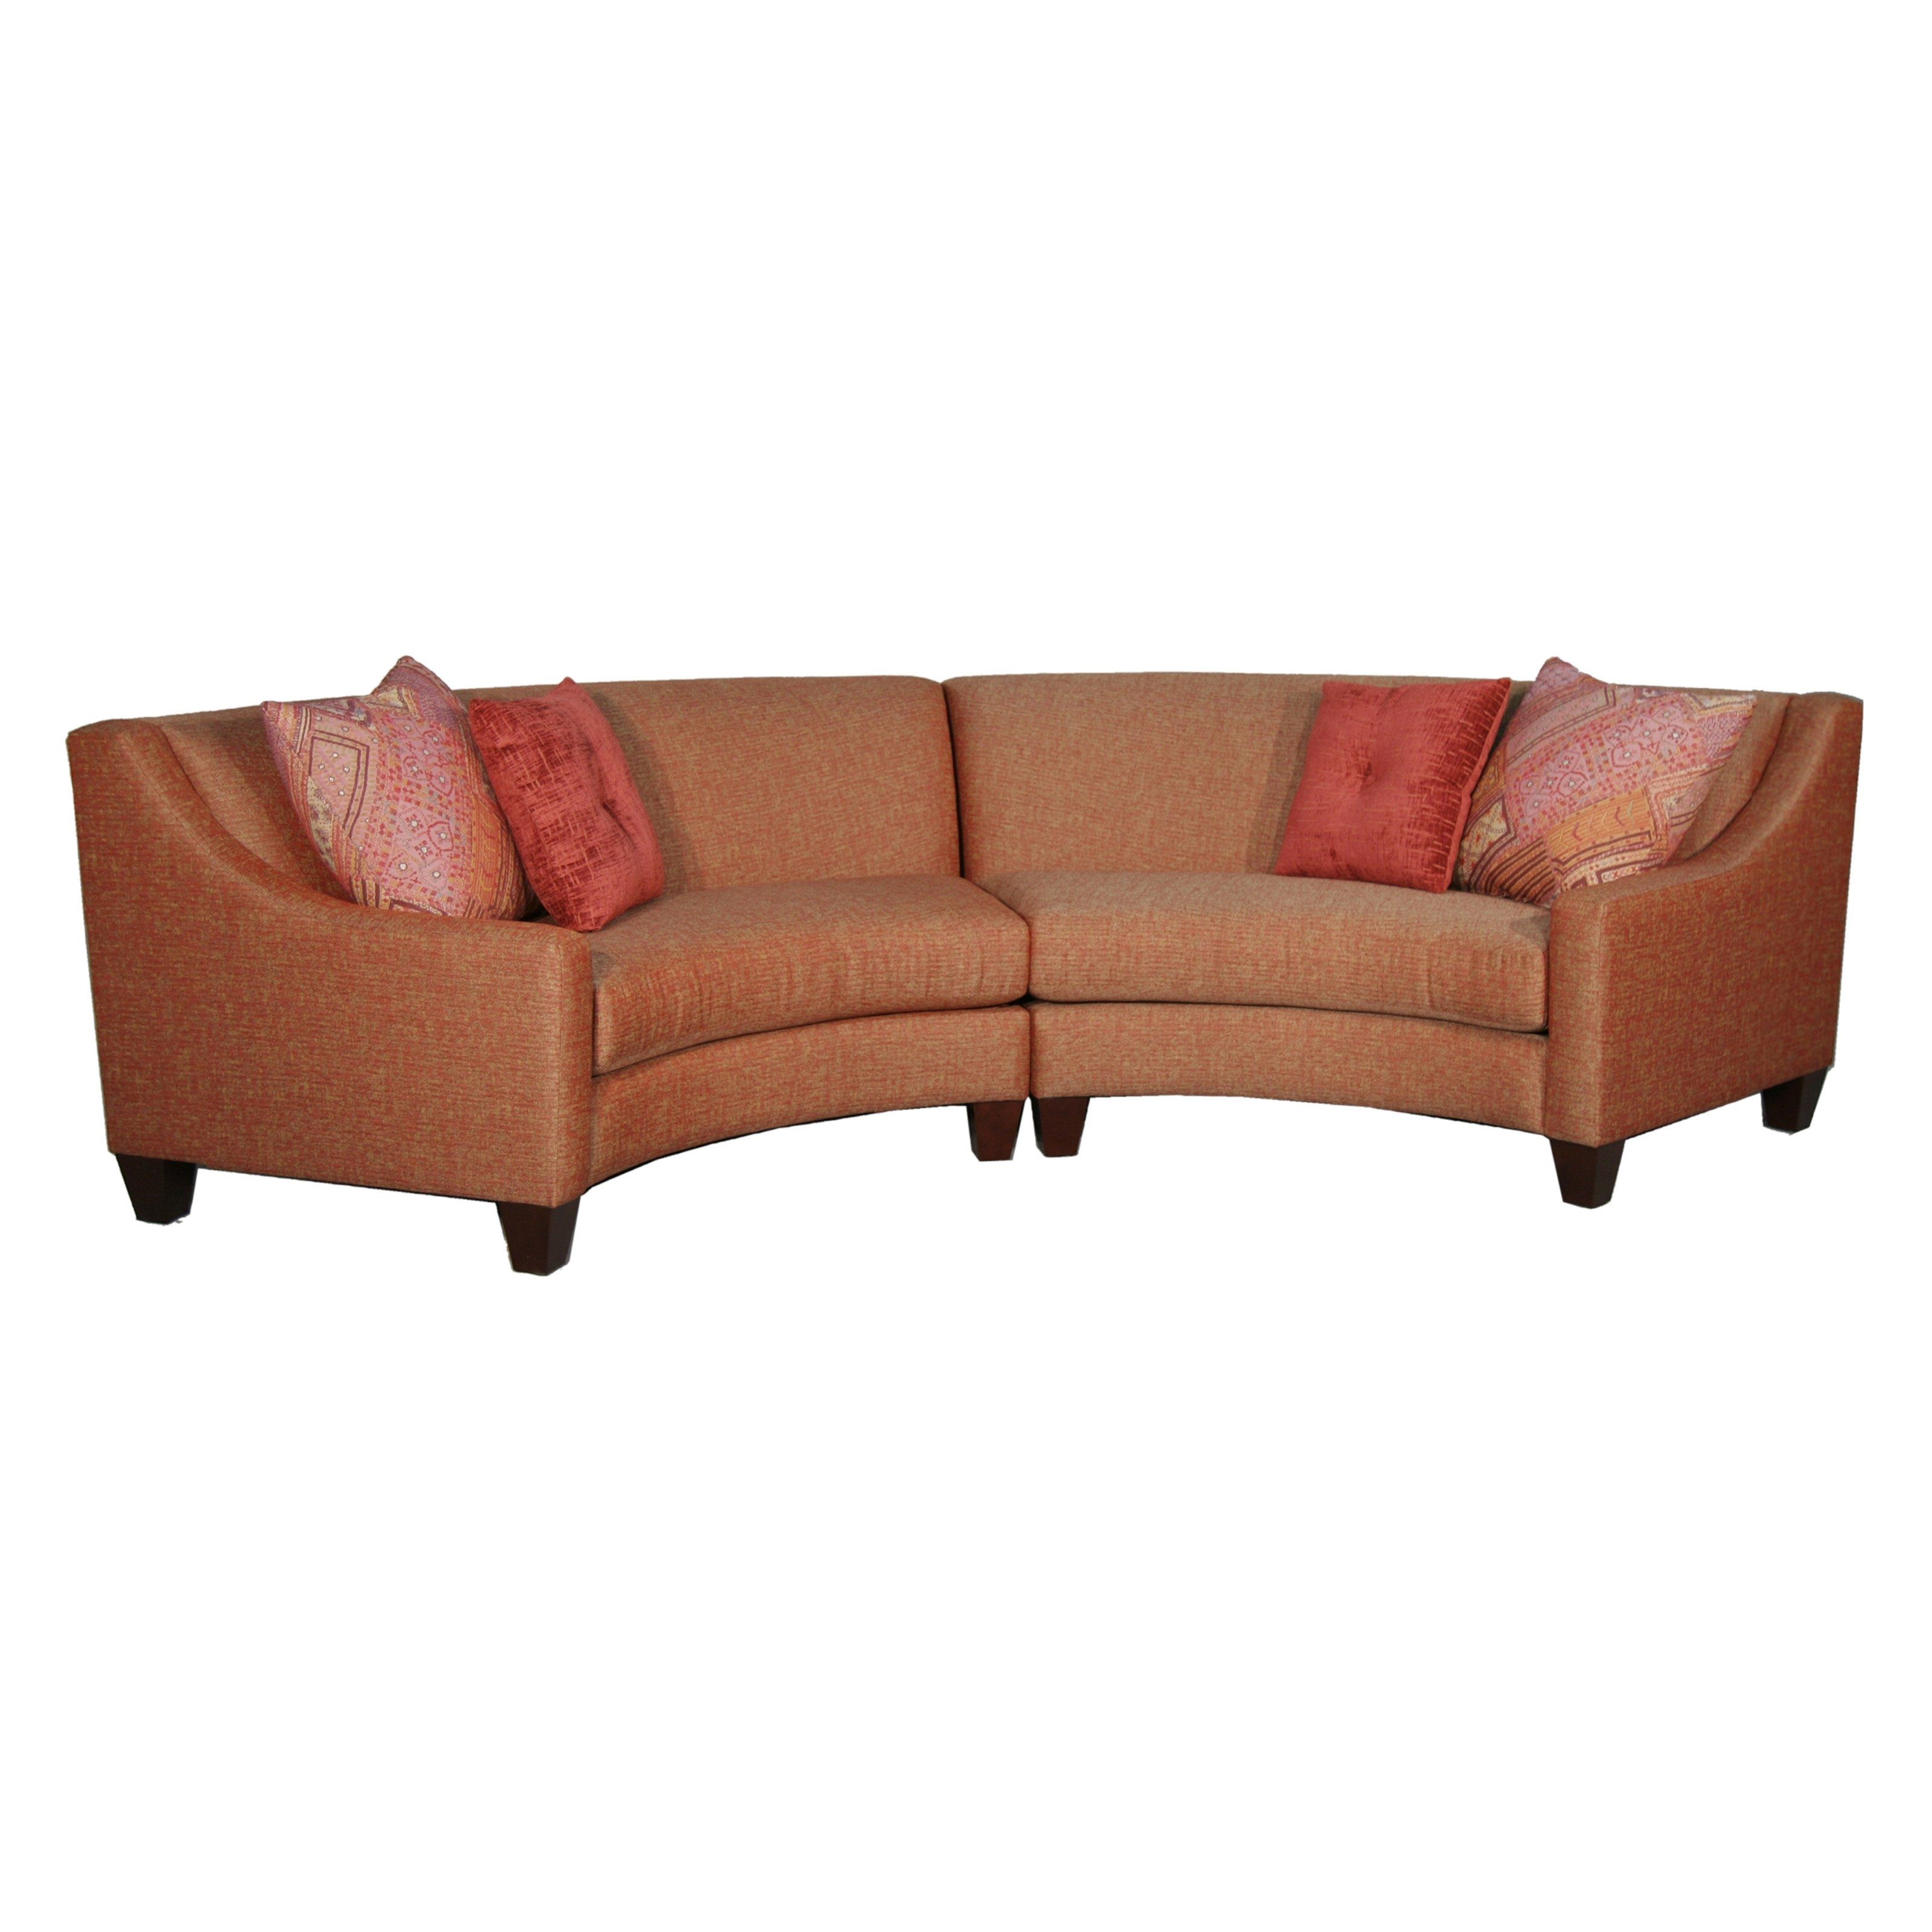 Fairmont Designs Aurora 2 Piece Sectional Sofa – Walmart With Aurora 2 Piece Sectionals (View 12 of 25)